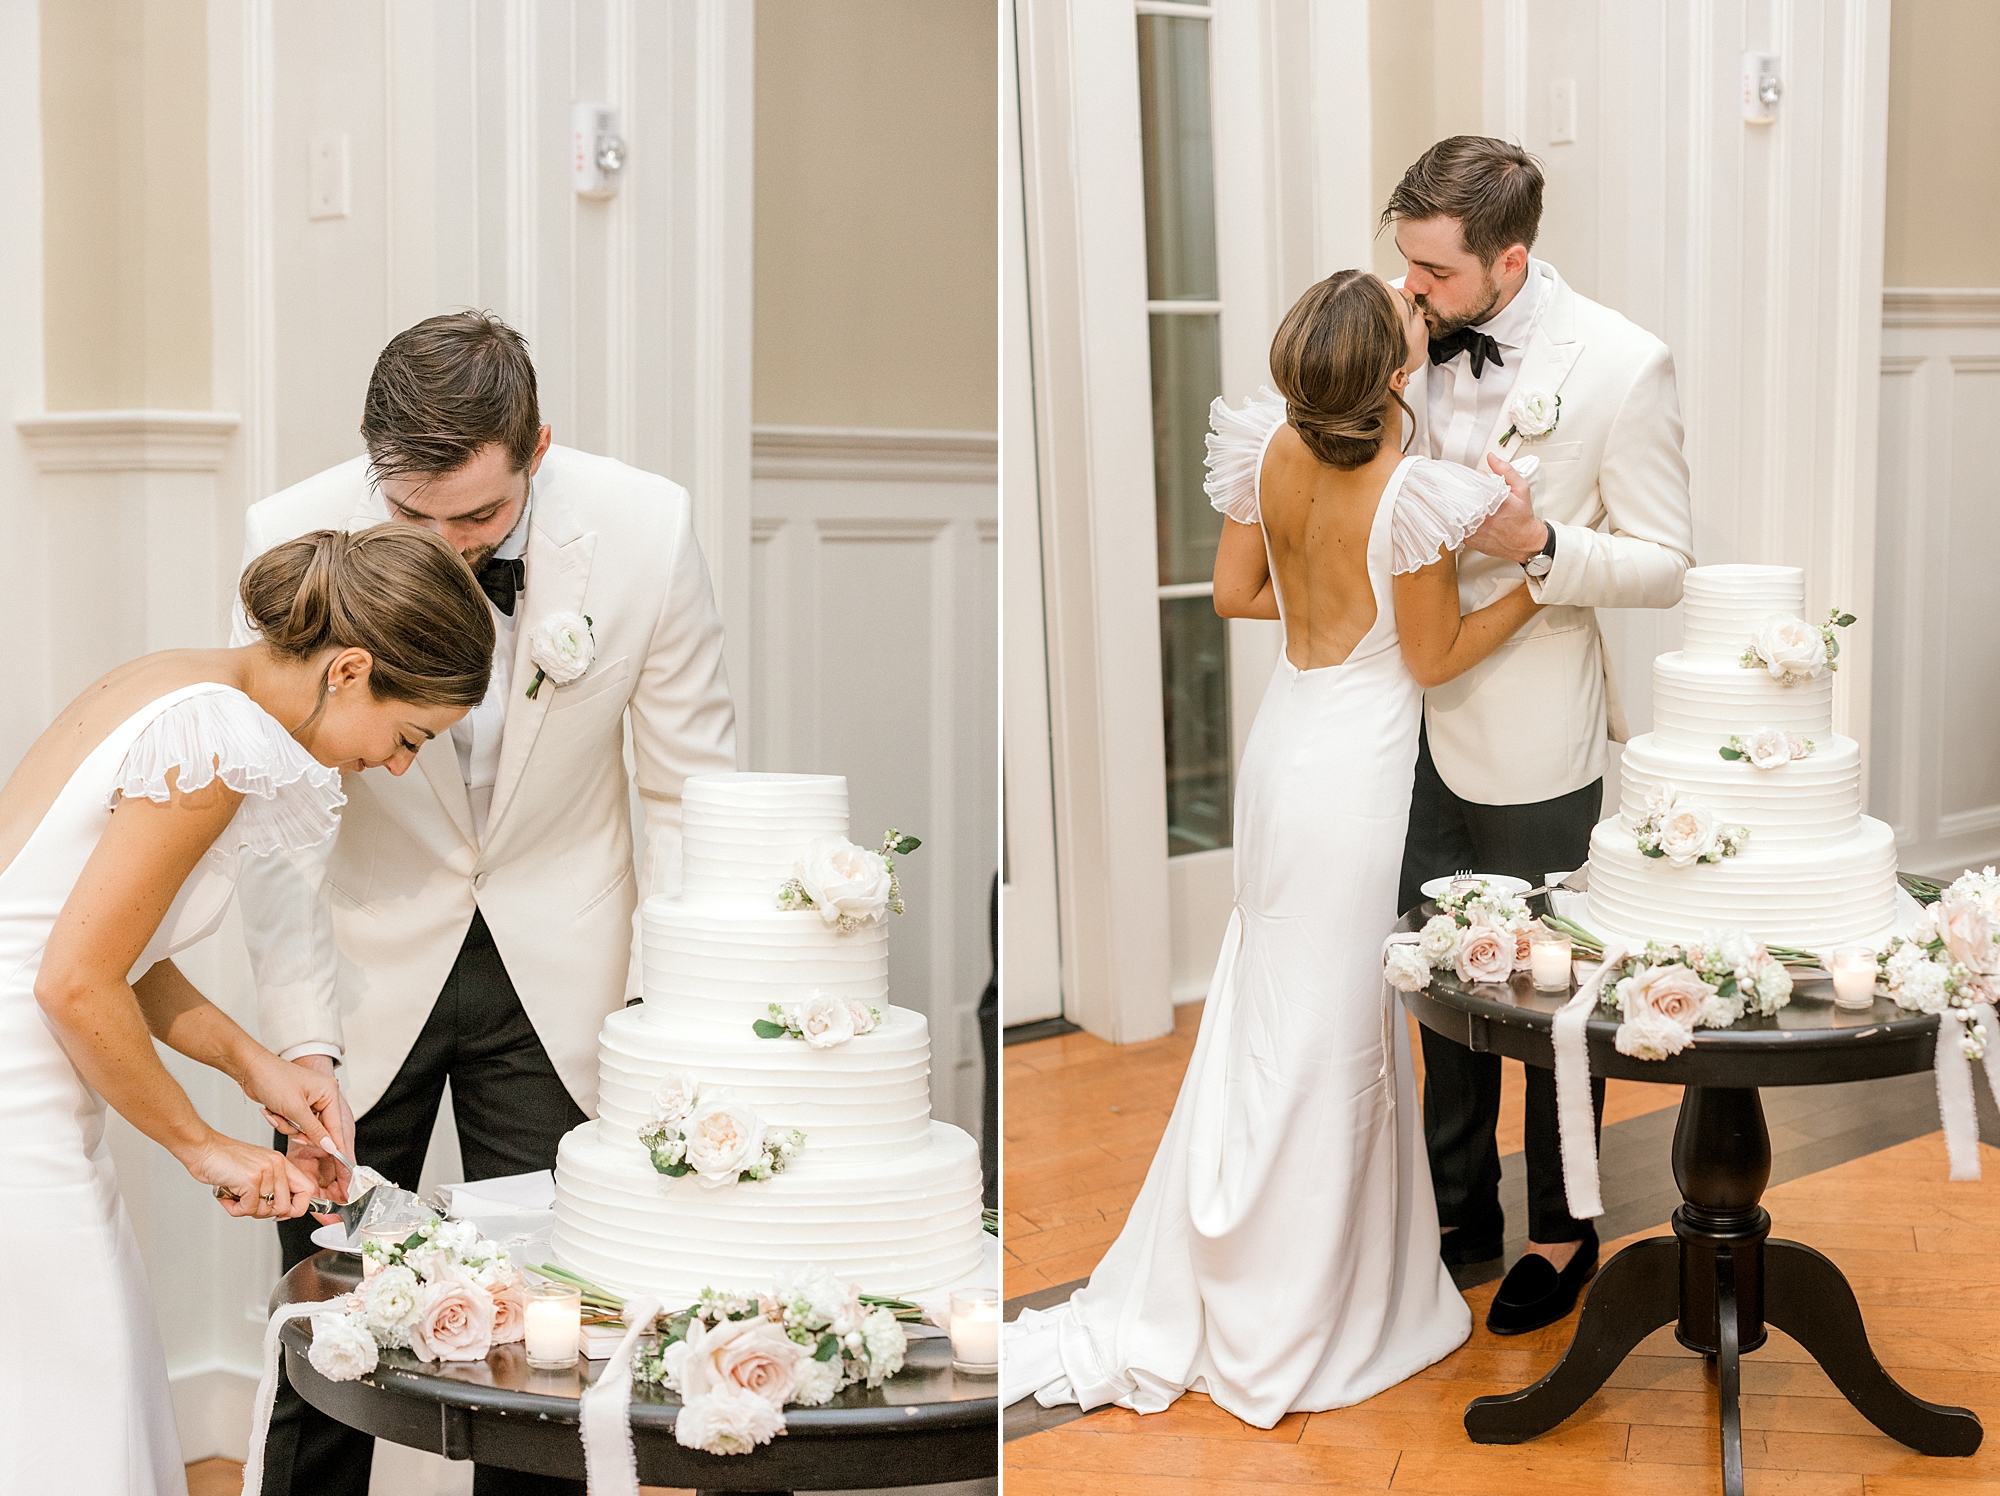 bride and groom cut wedding cake together during NJ wedding reception